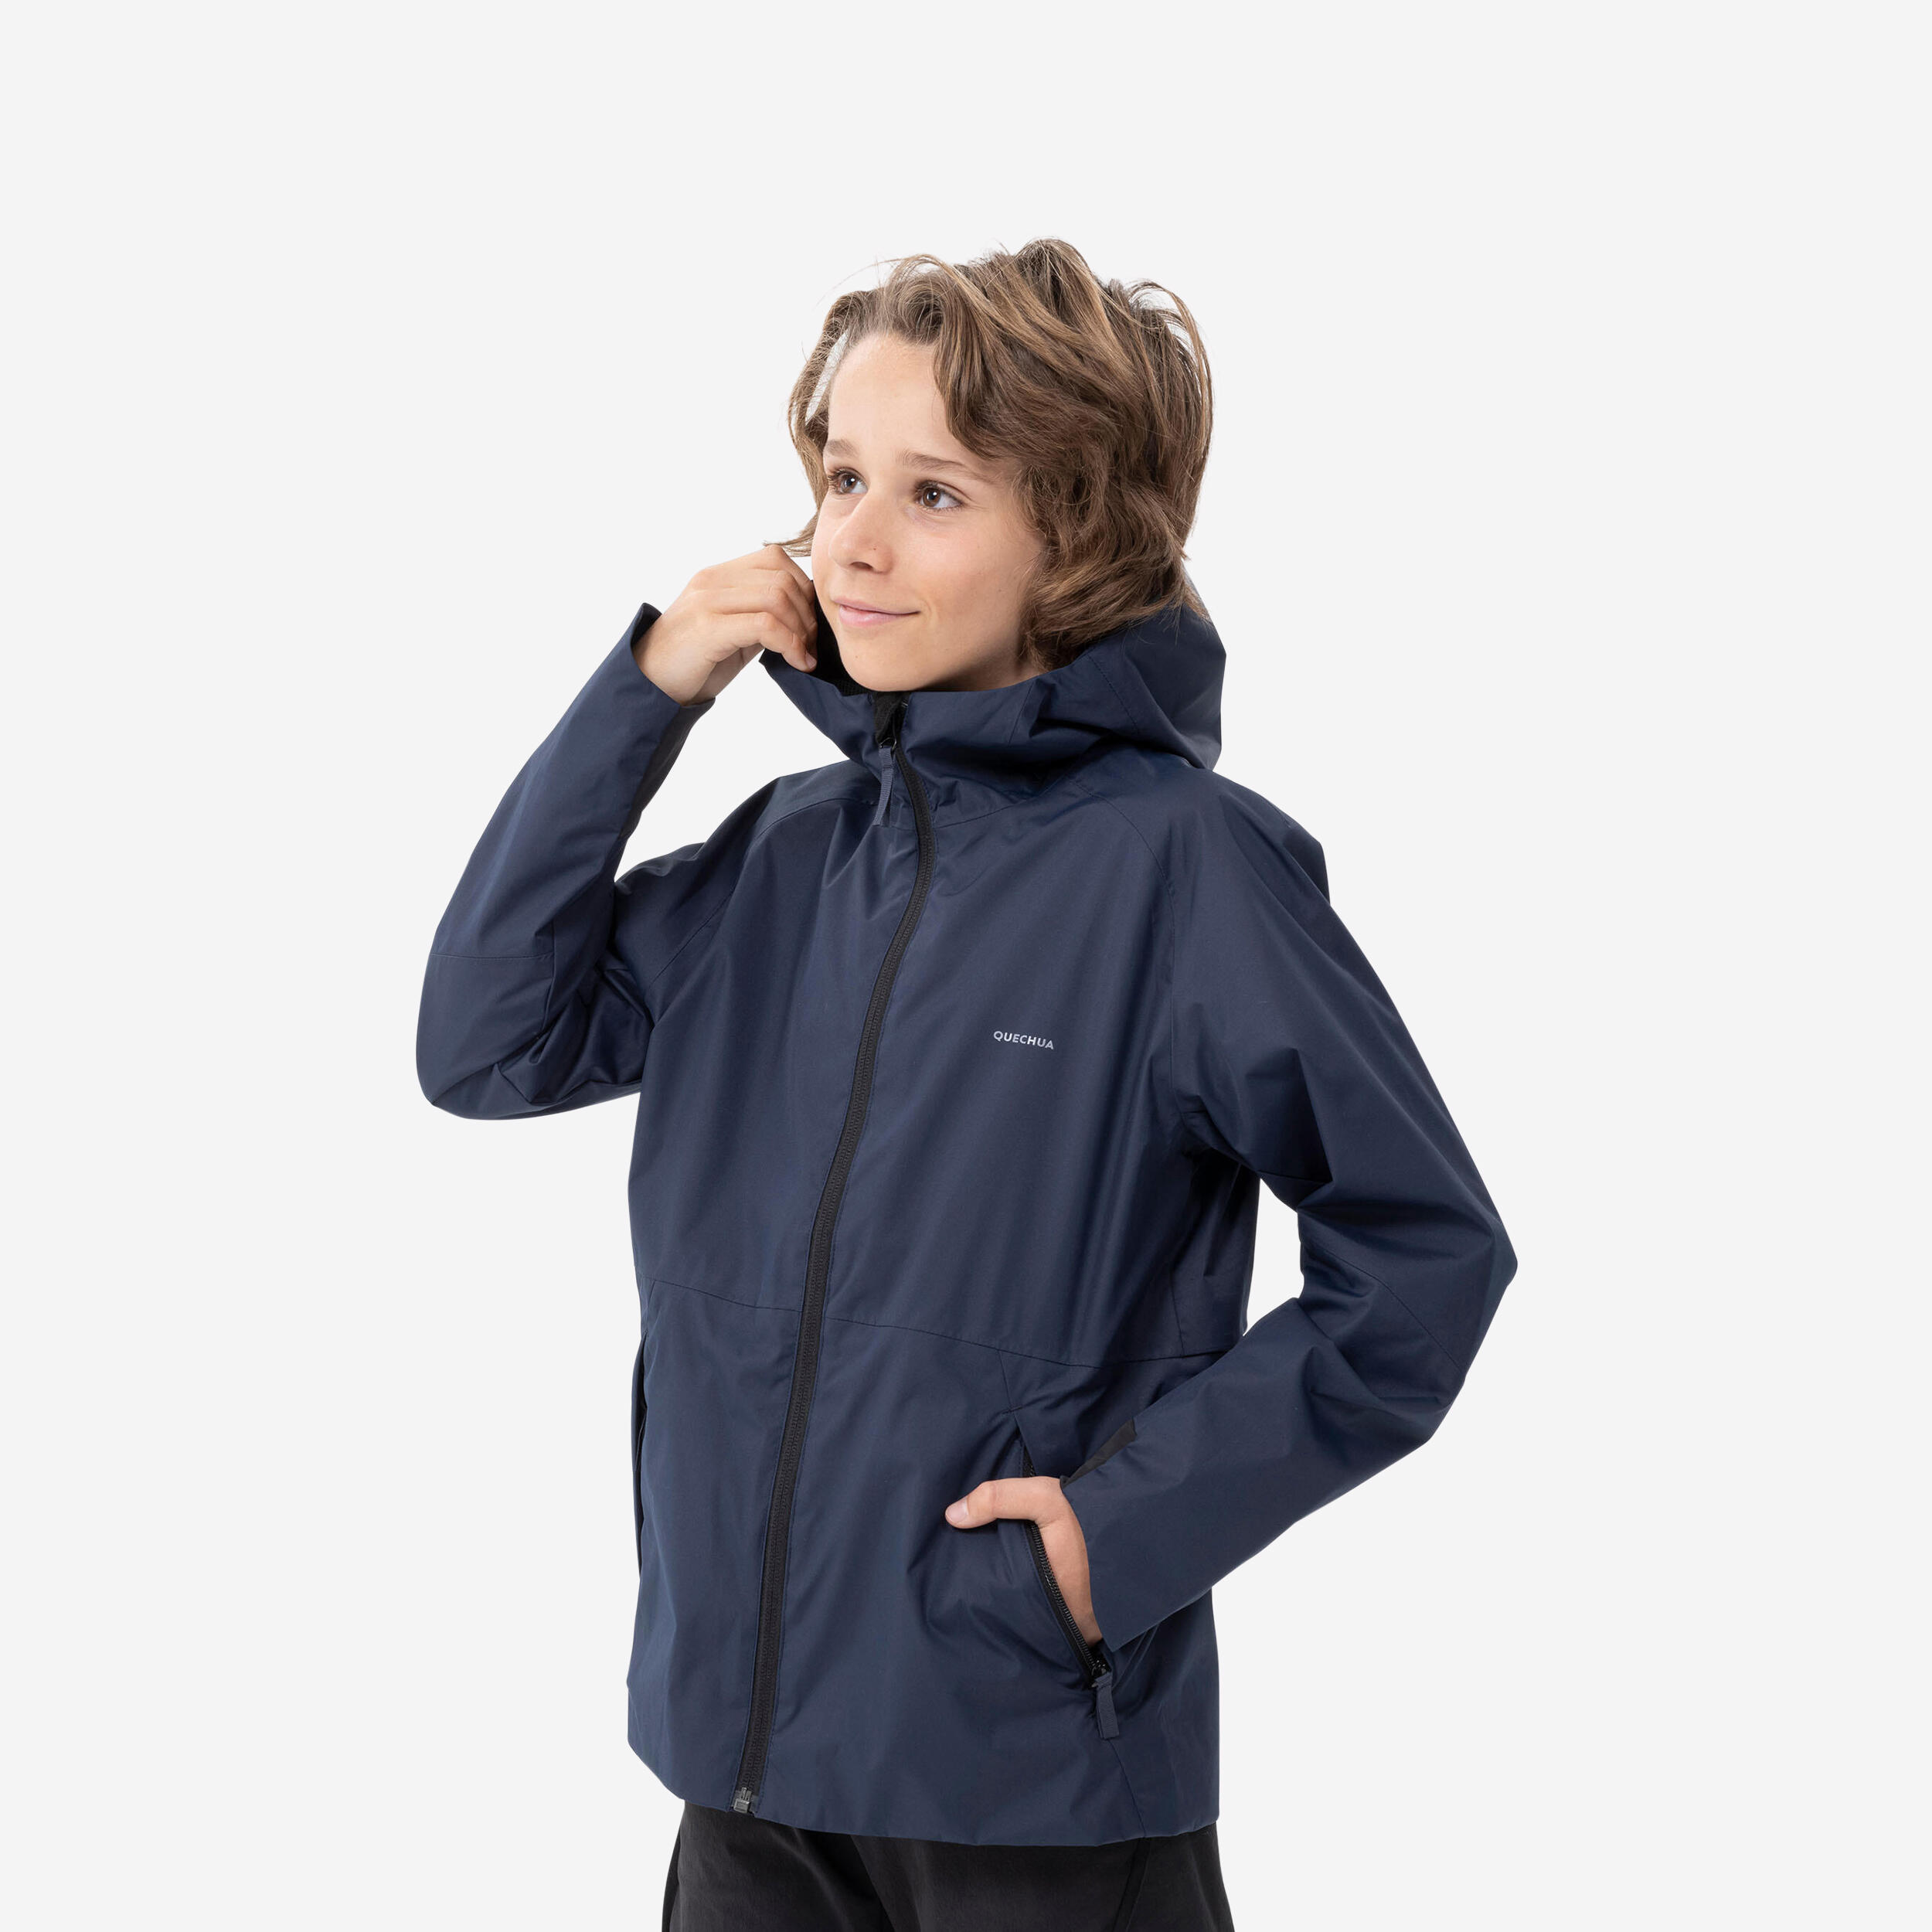 Kaiwaka Kids 100% Waterproof Overtrousers Size 4-12 Black – School